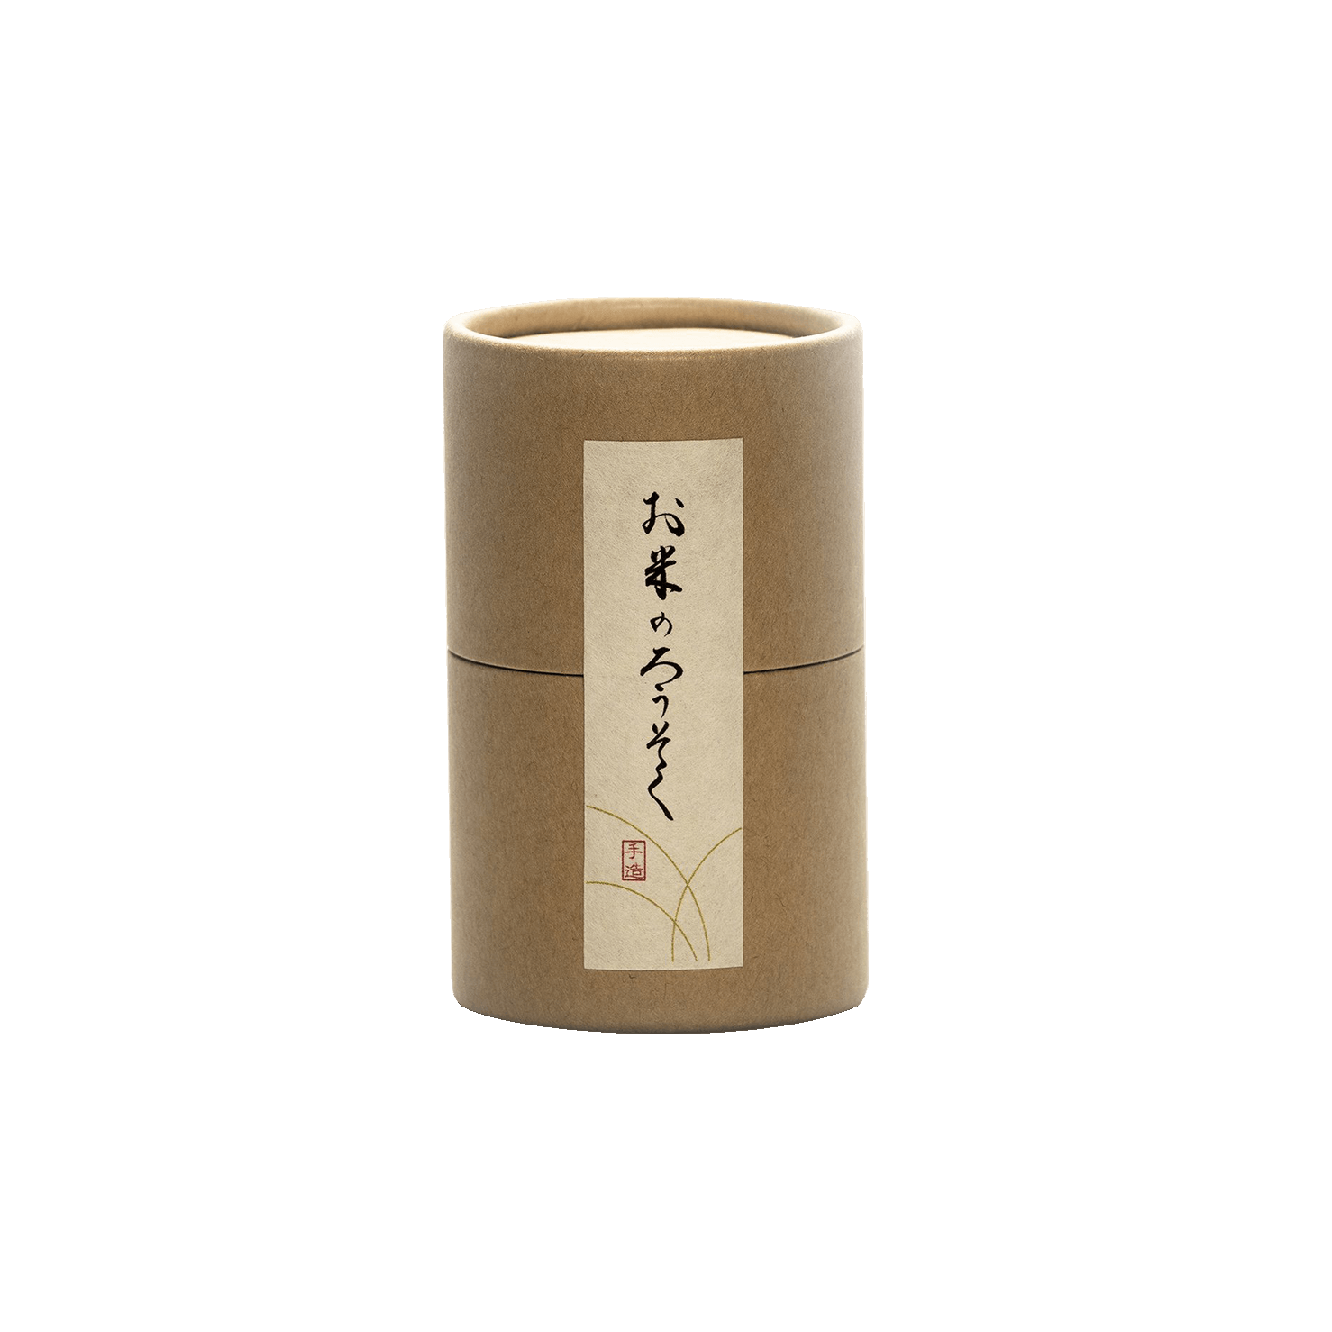 DAIYO Handmade Japanese Rice Wax Candles in Cylindrical Tub